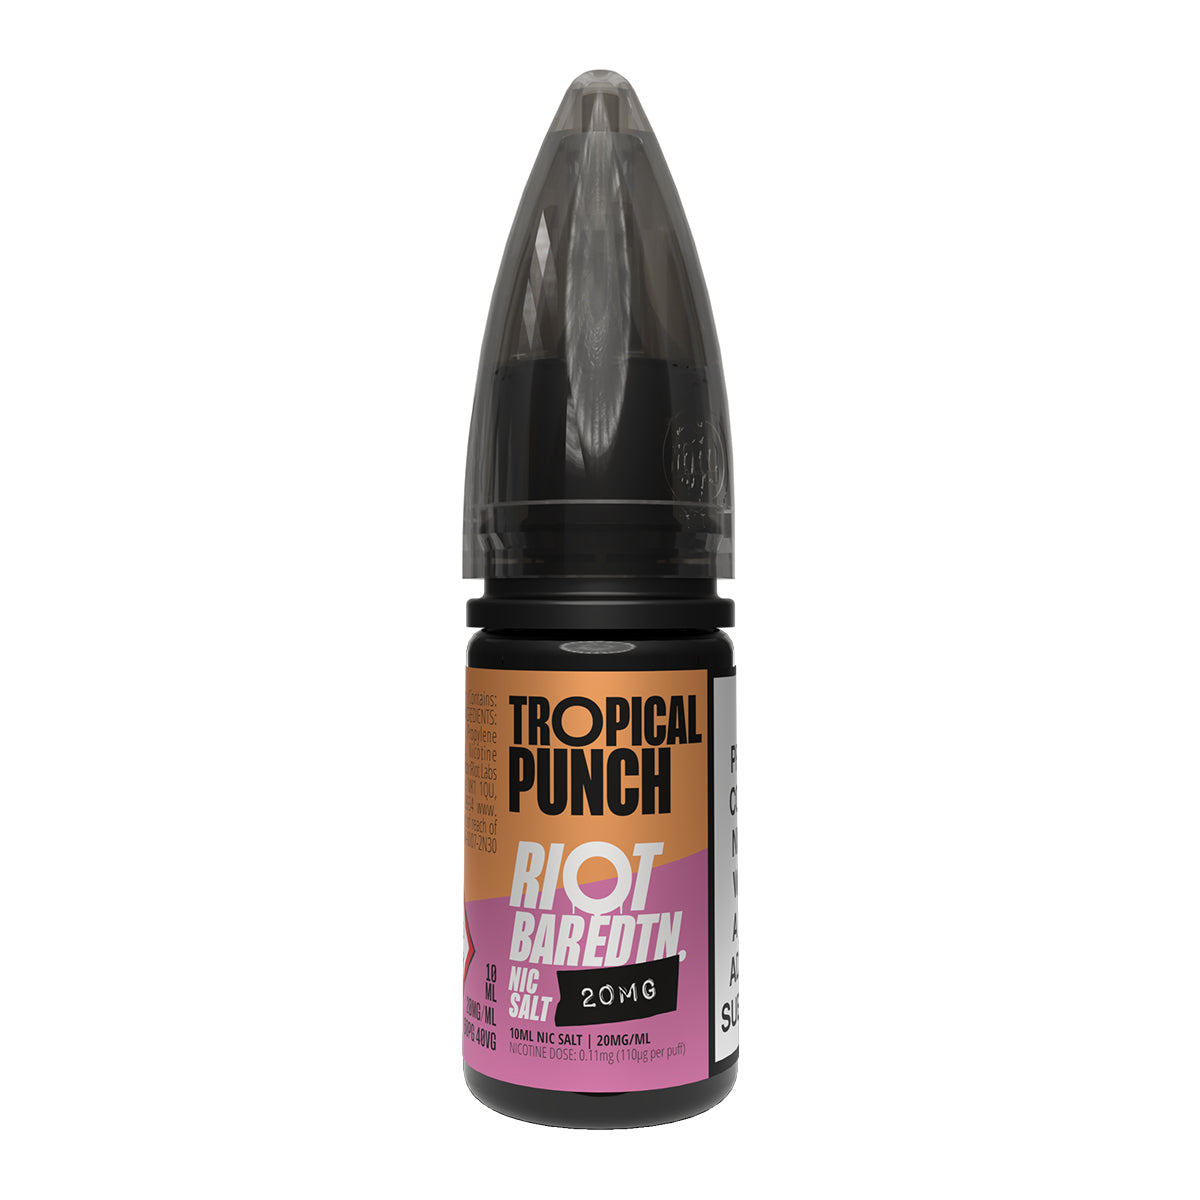 Tropical Punch 10ml Nicotine Salt 20mg by Riot Bar Edtn